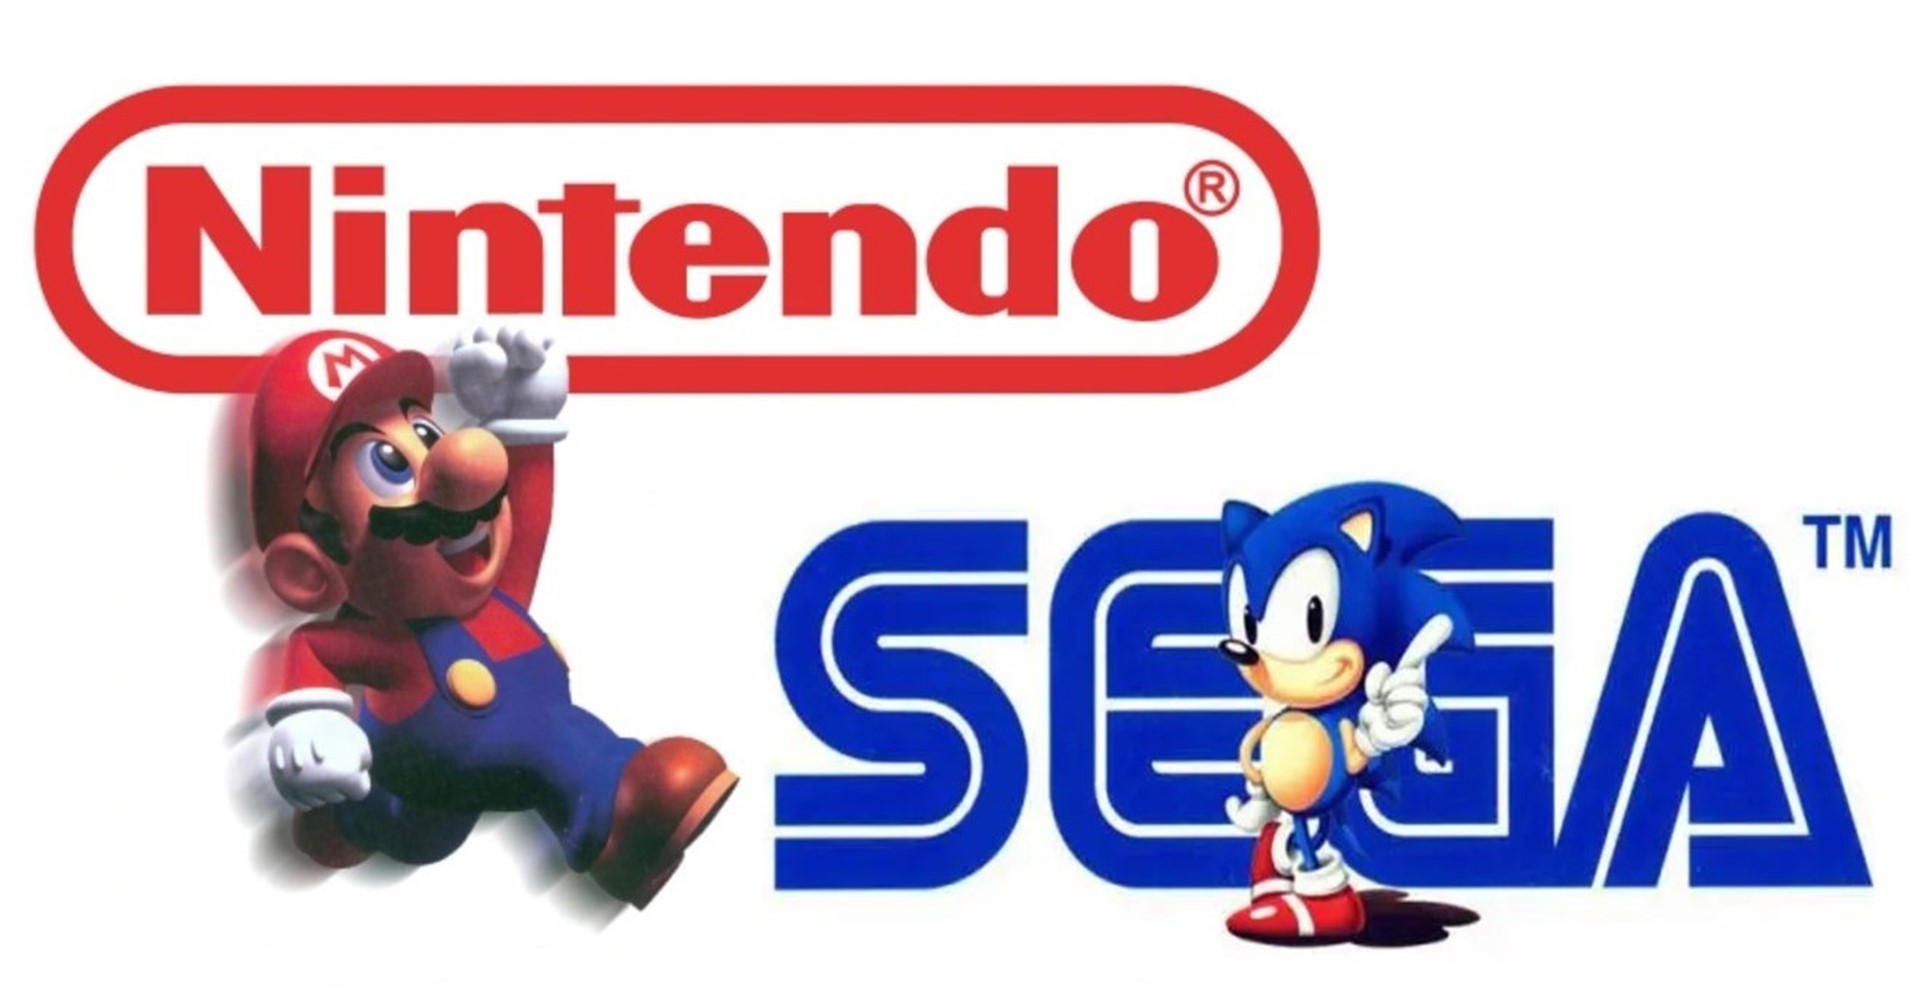 Nintendo และ SEGA เตรียมขึ้นเงินเดือนทีมงานตามคำเรียกร้องของรัฐบาล